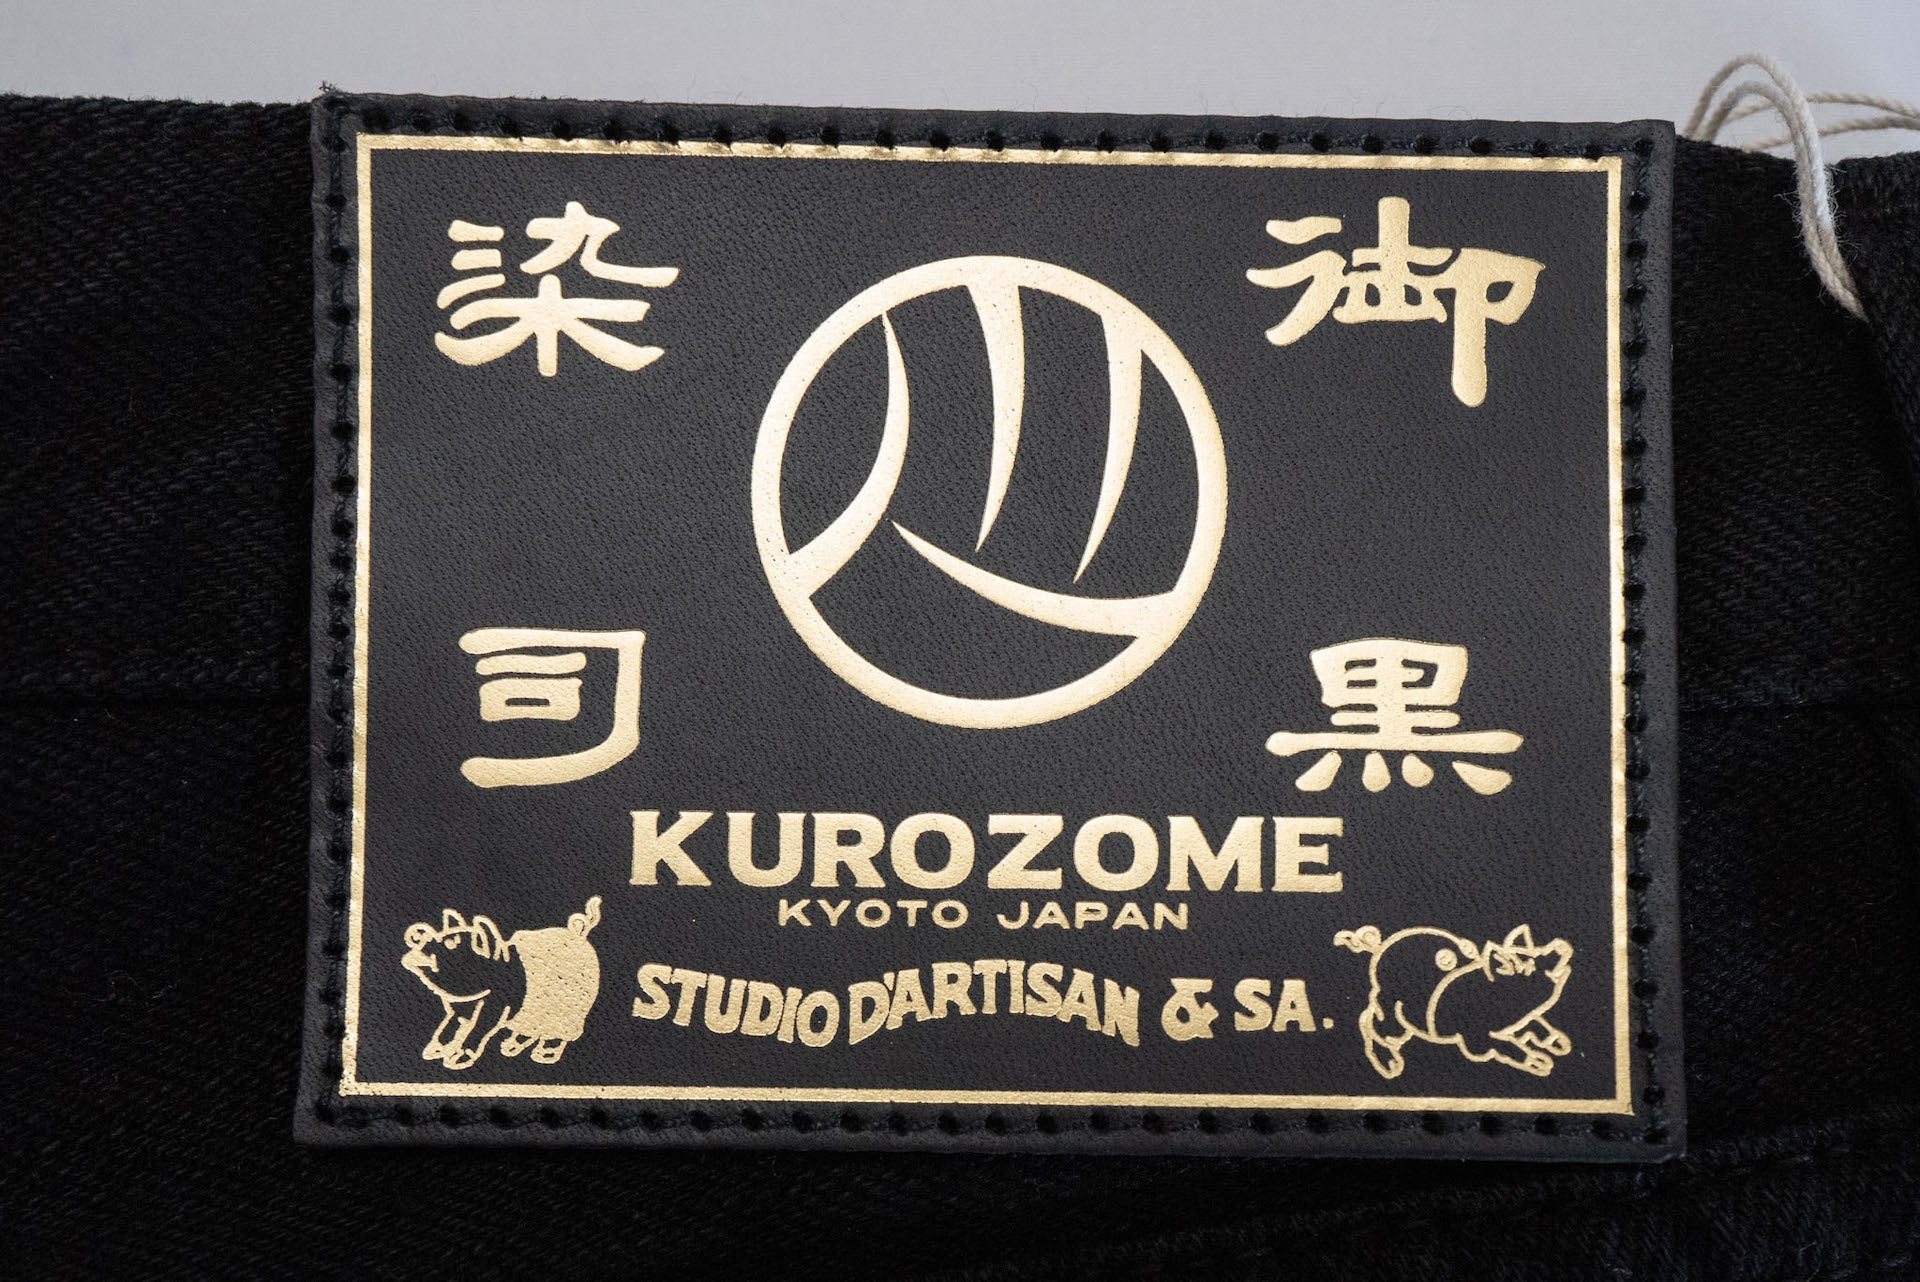 Studio D'Artisan 14oz "Kurozome" Ultimate-Black Denim (Slim Tapered fit)